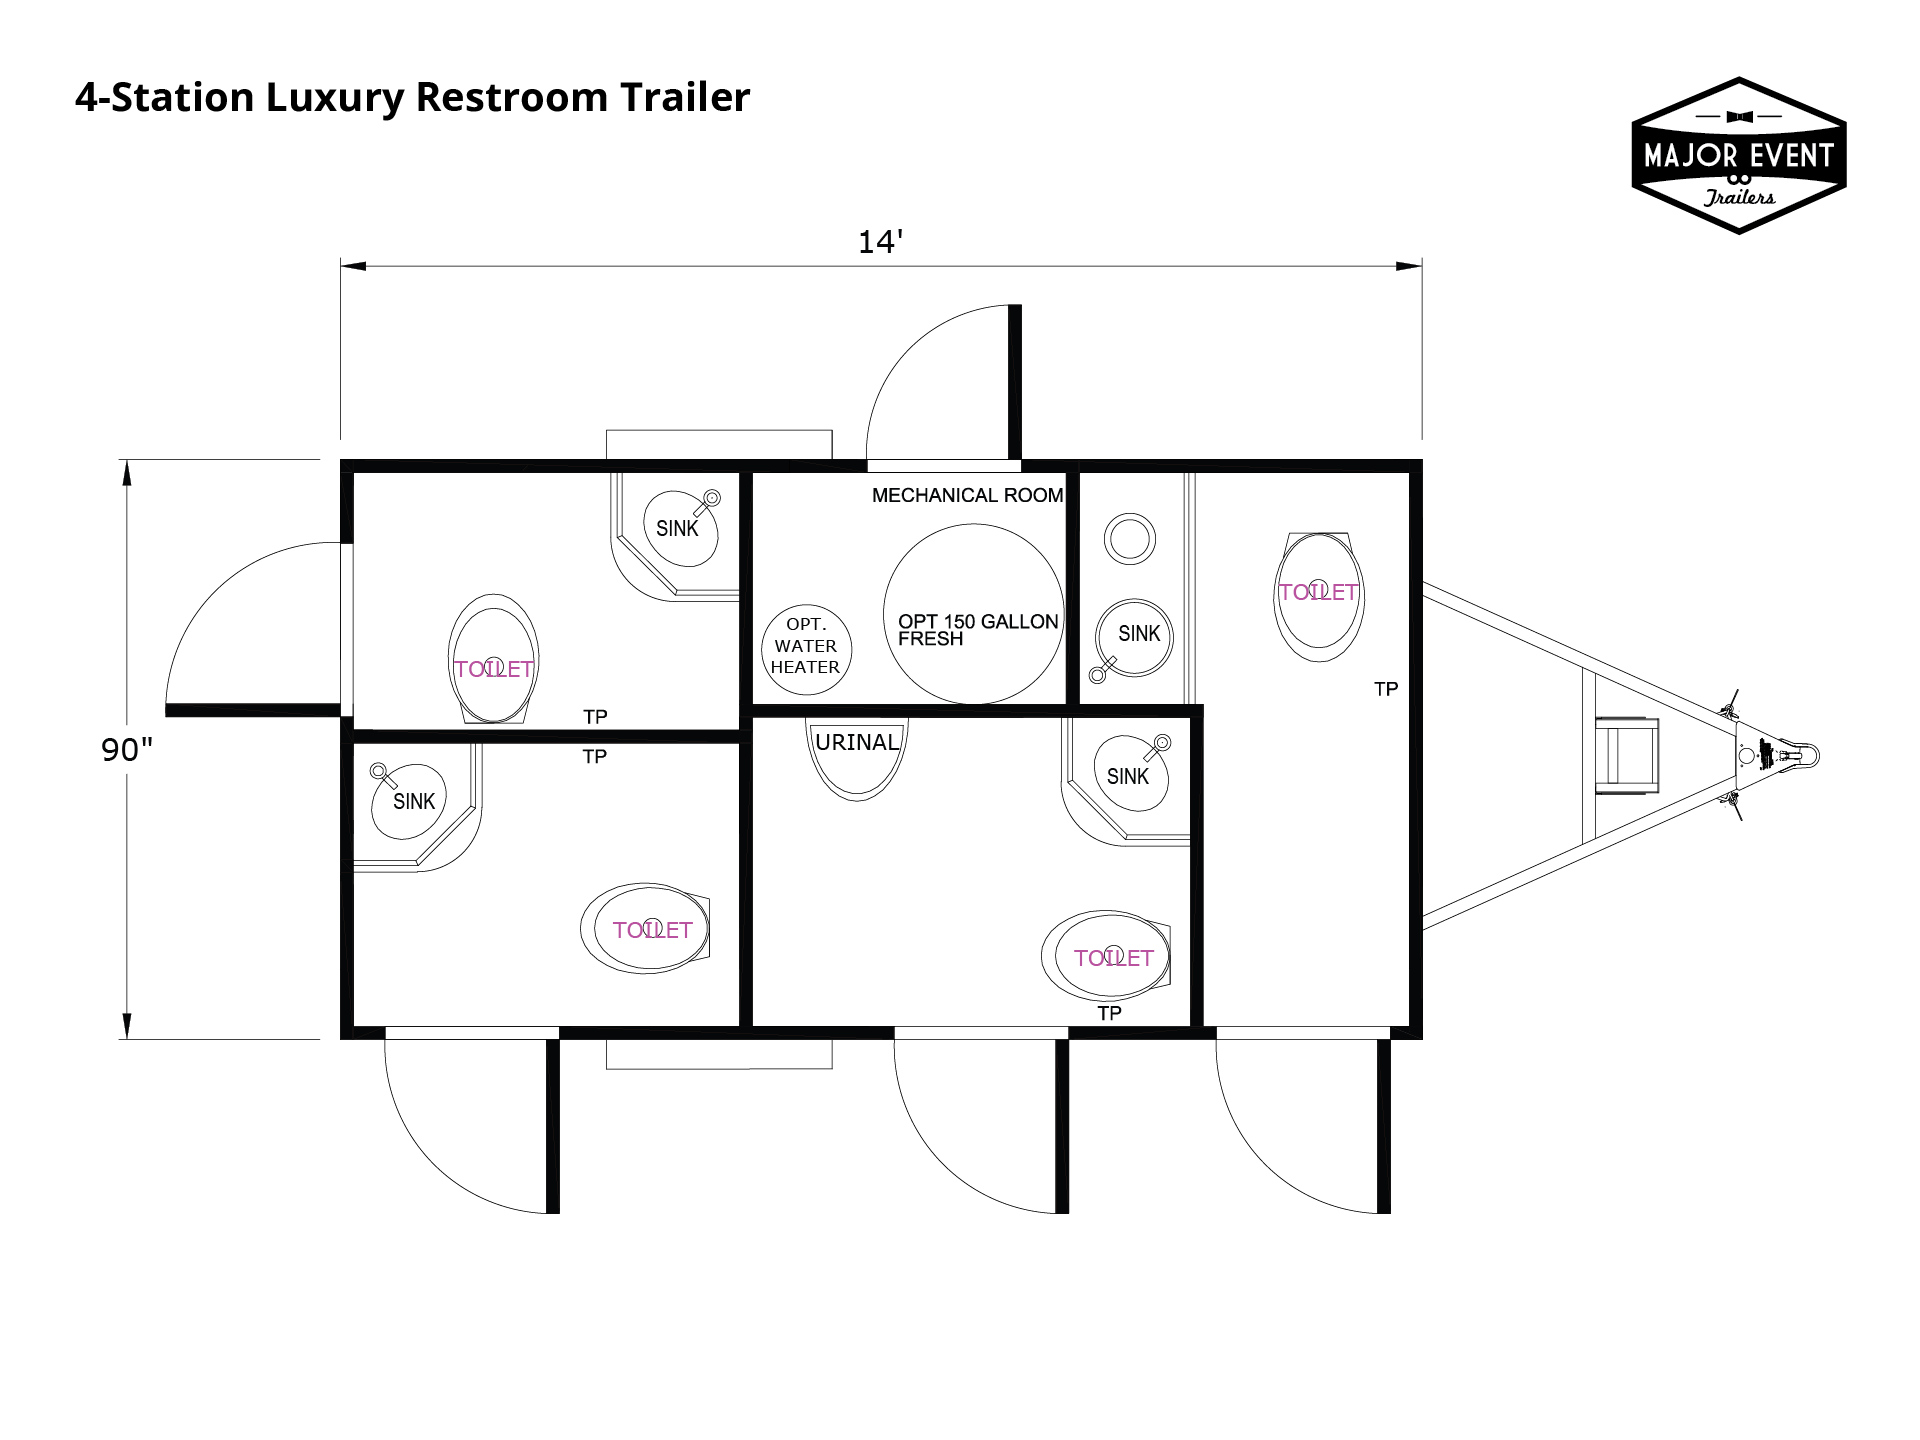 4-Station Luxury Restroom Trailer – Trailer Diagram View